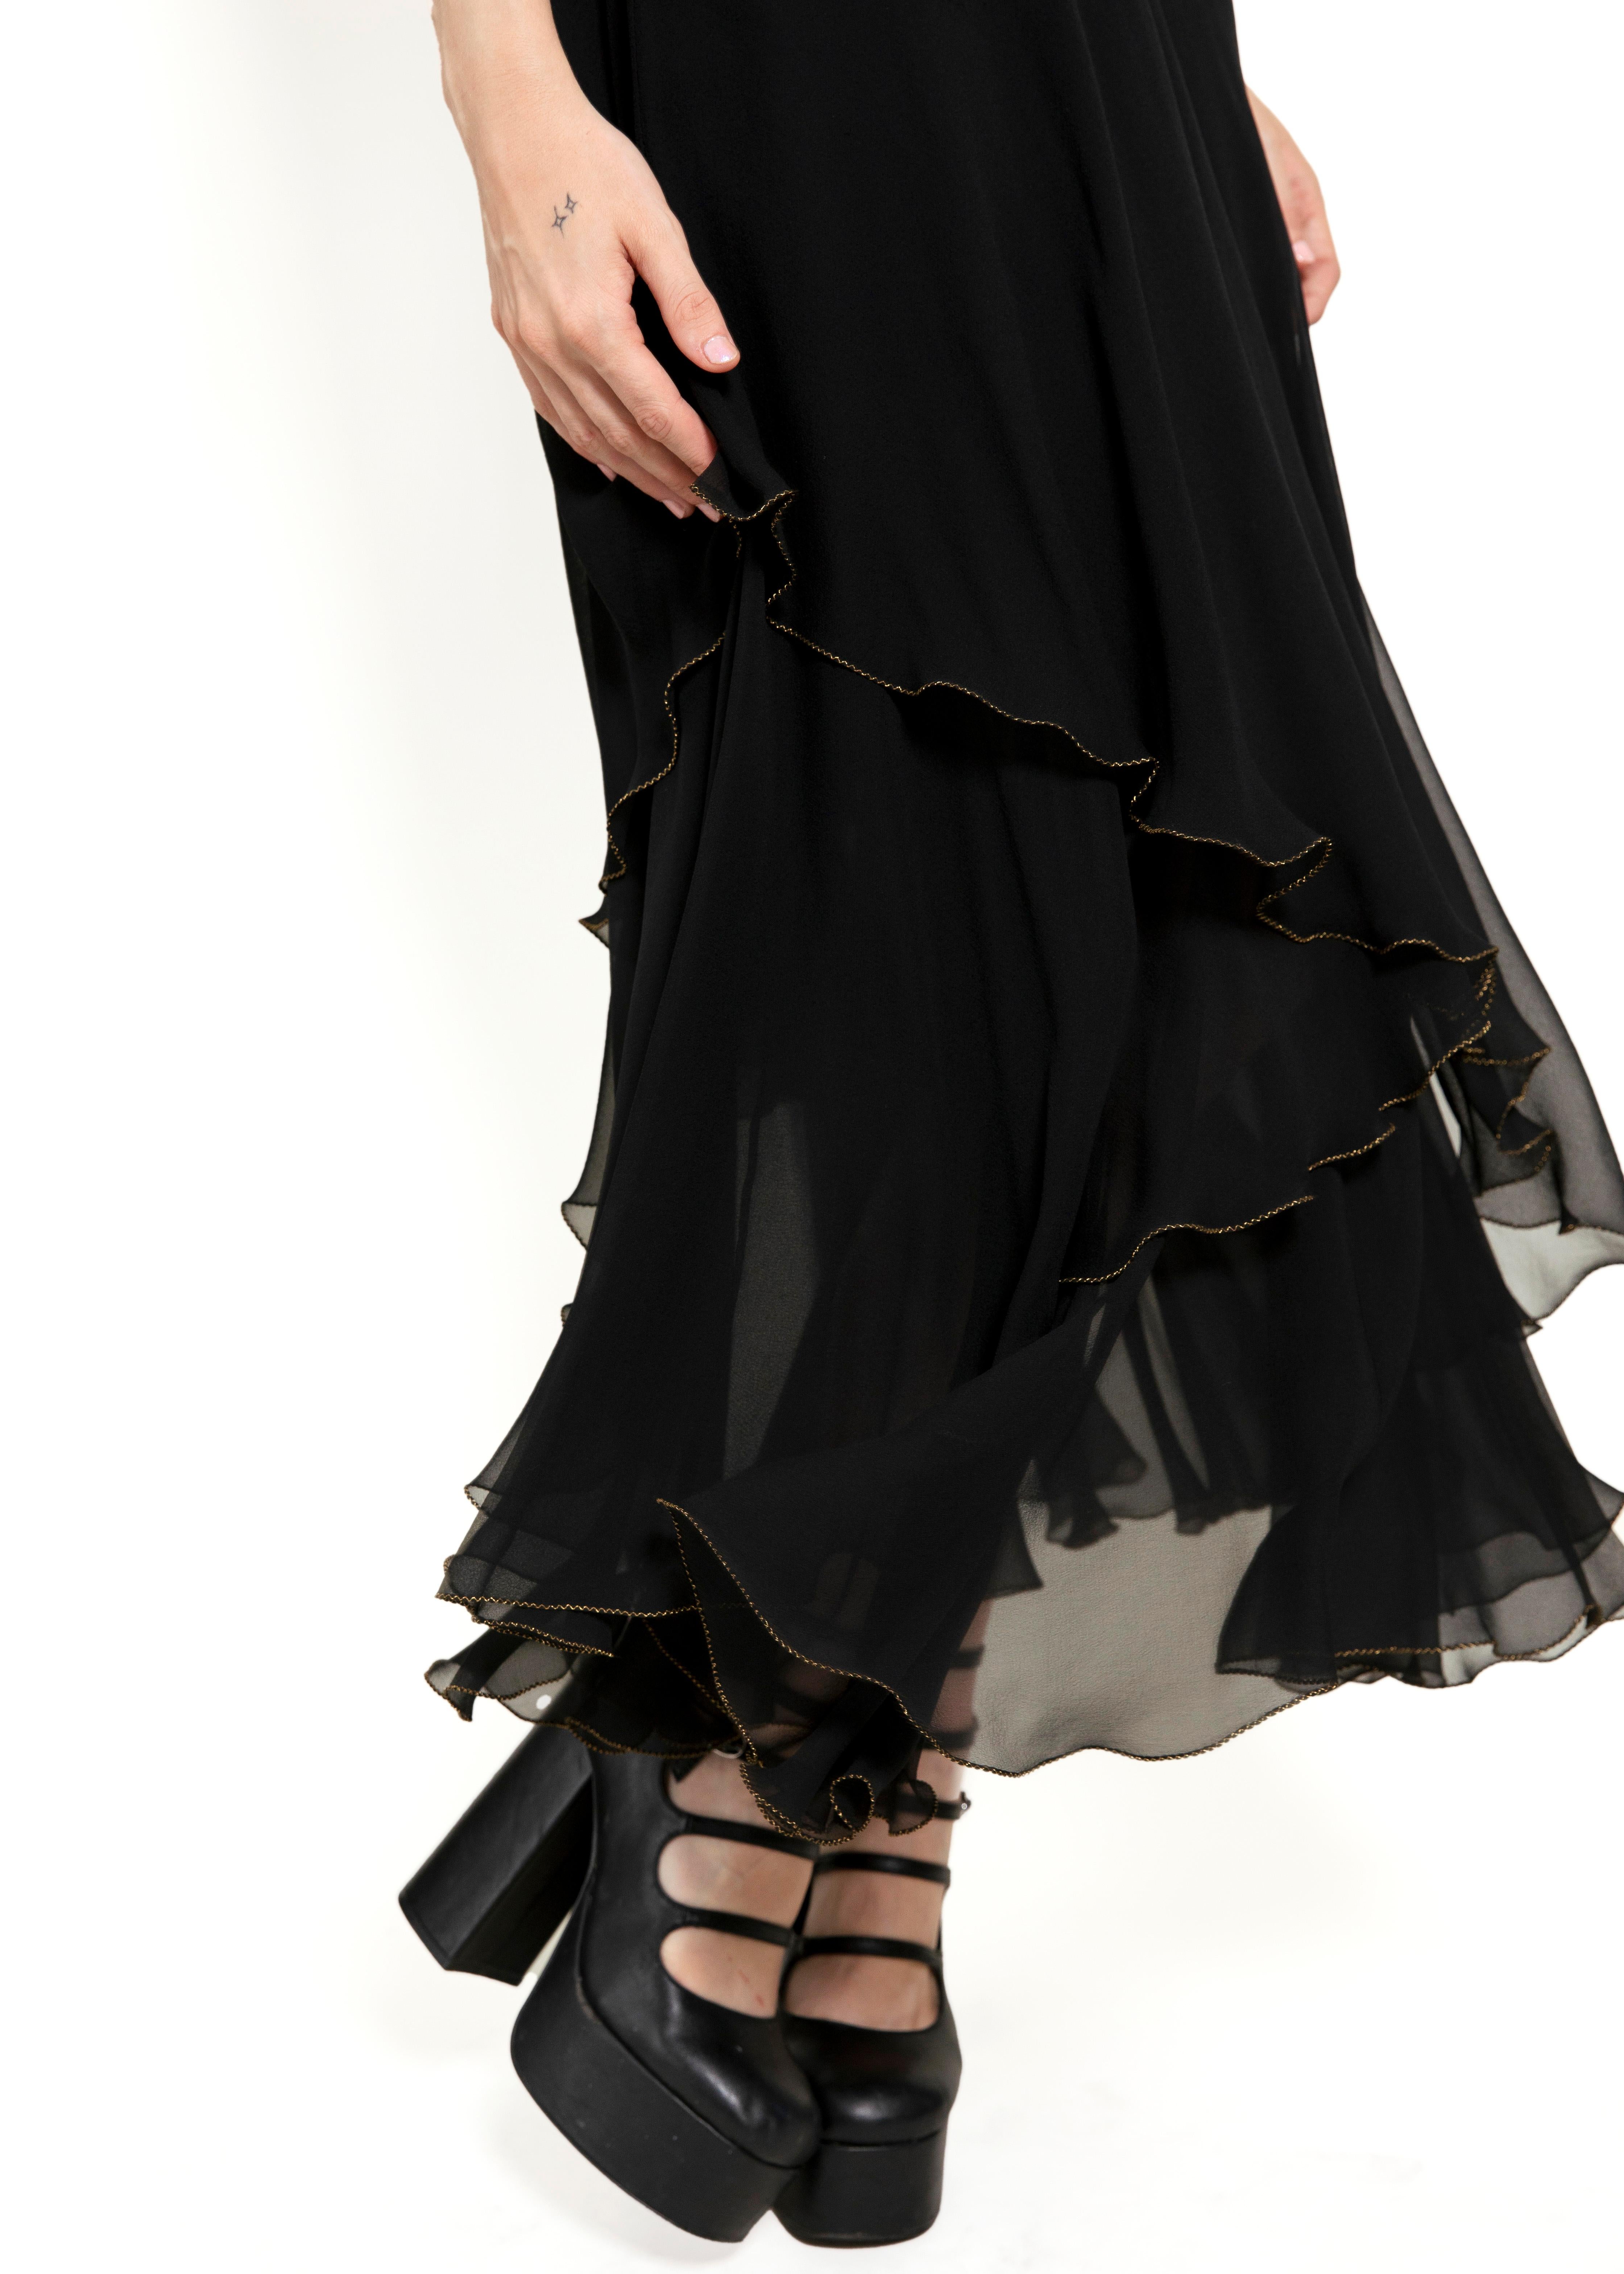 Ralph Lauren Black Silk Chiffon Dress With Gold Braided Straps For Sale 3